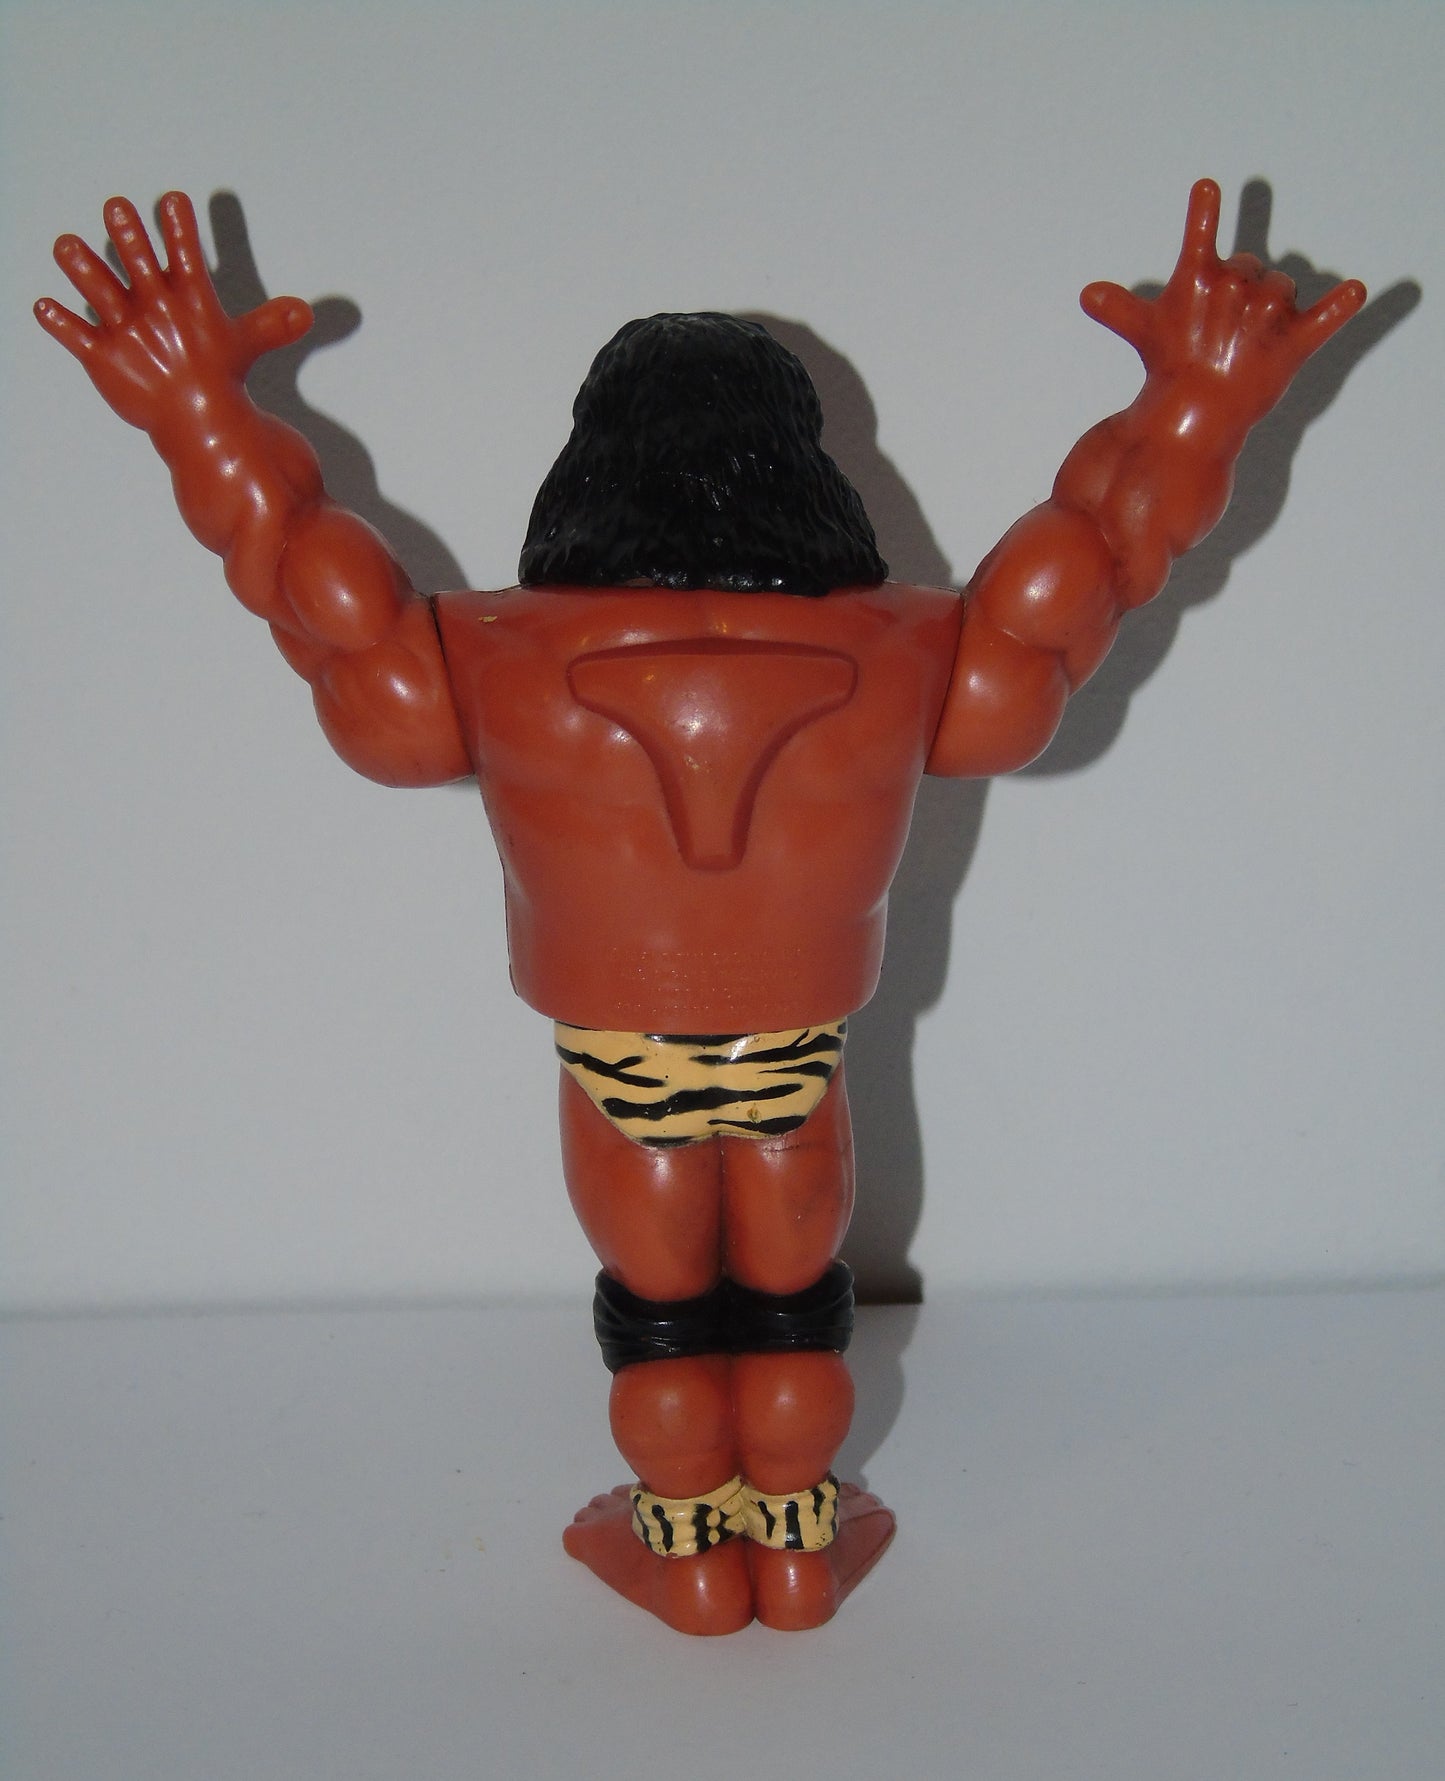 Superfly Jimmy Snuka WWF Hasbro Wrestling Figure